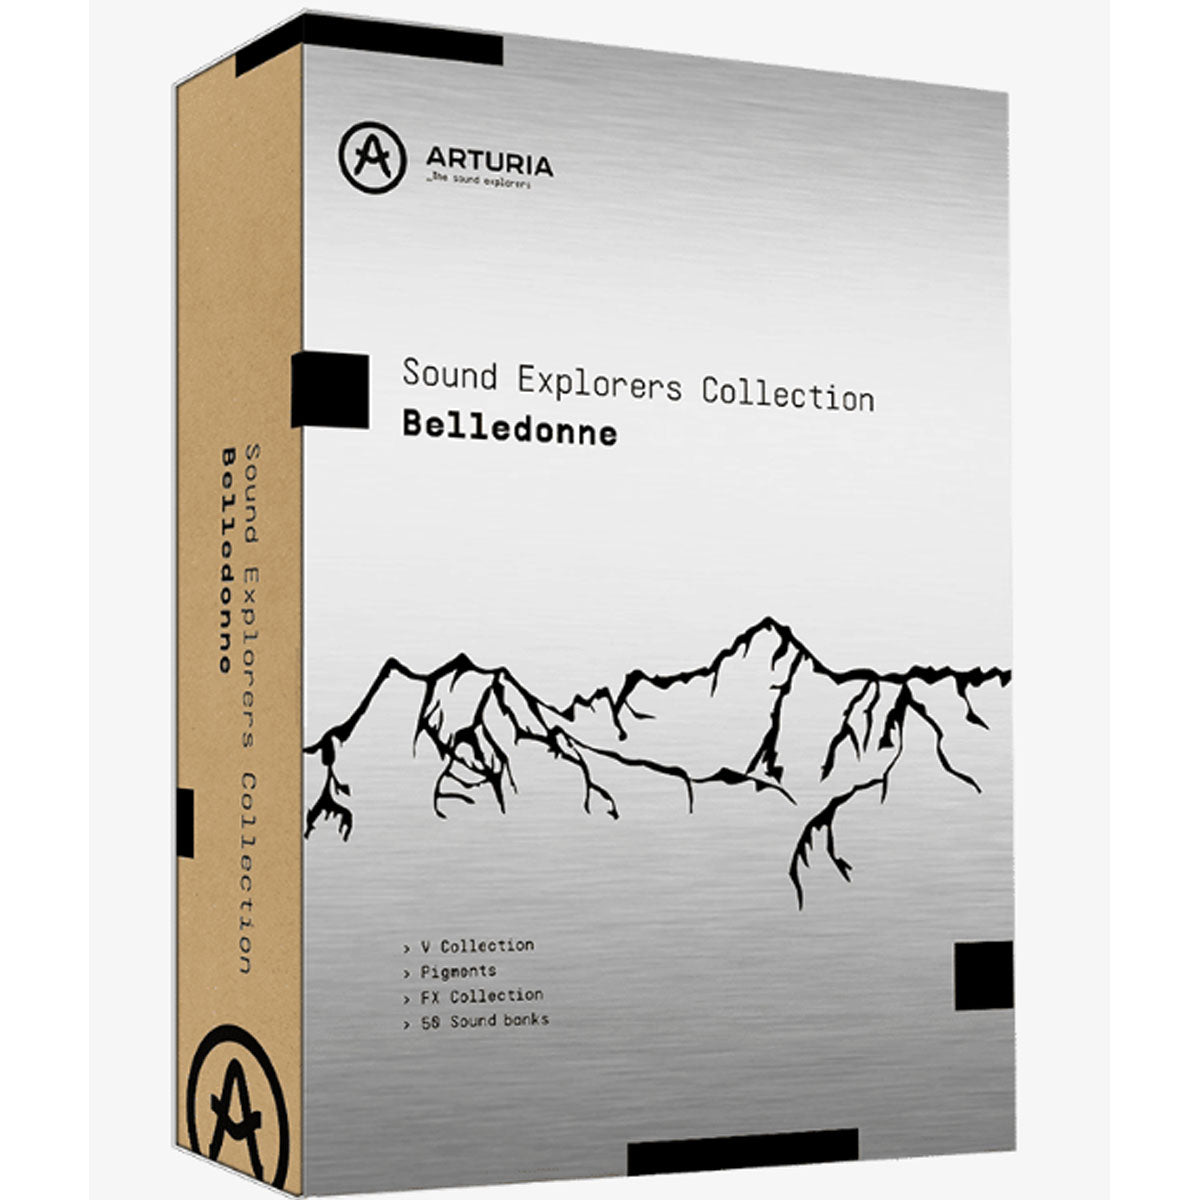 Arturia Sound Explorers Collection 2 Belledone